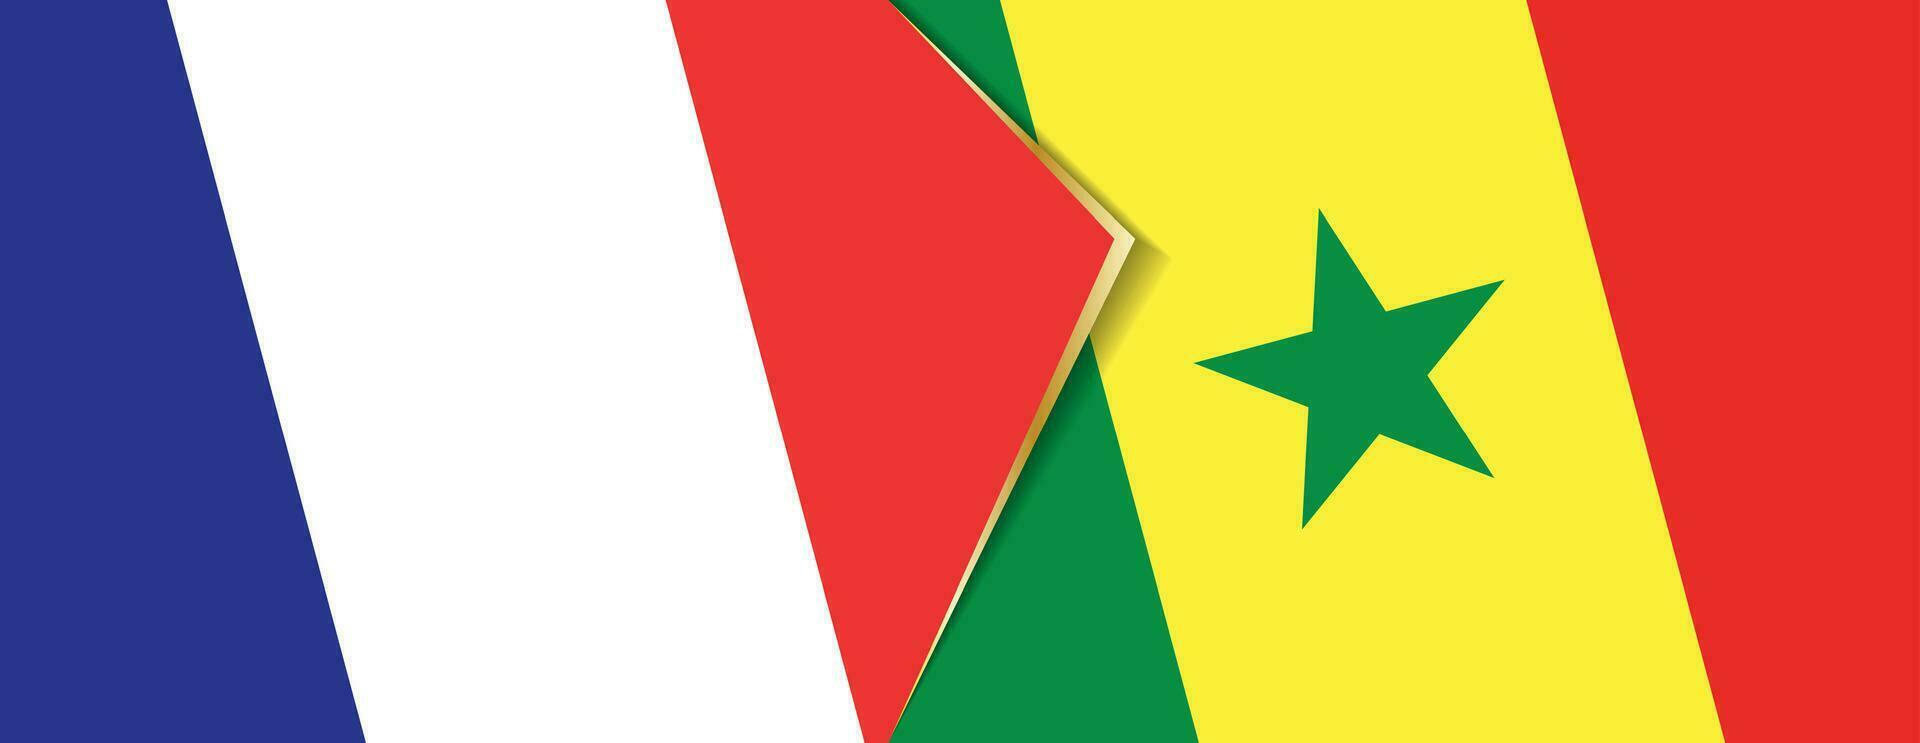 França e Senegal bandeiras, dois vetor bandeiras.